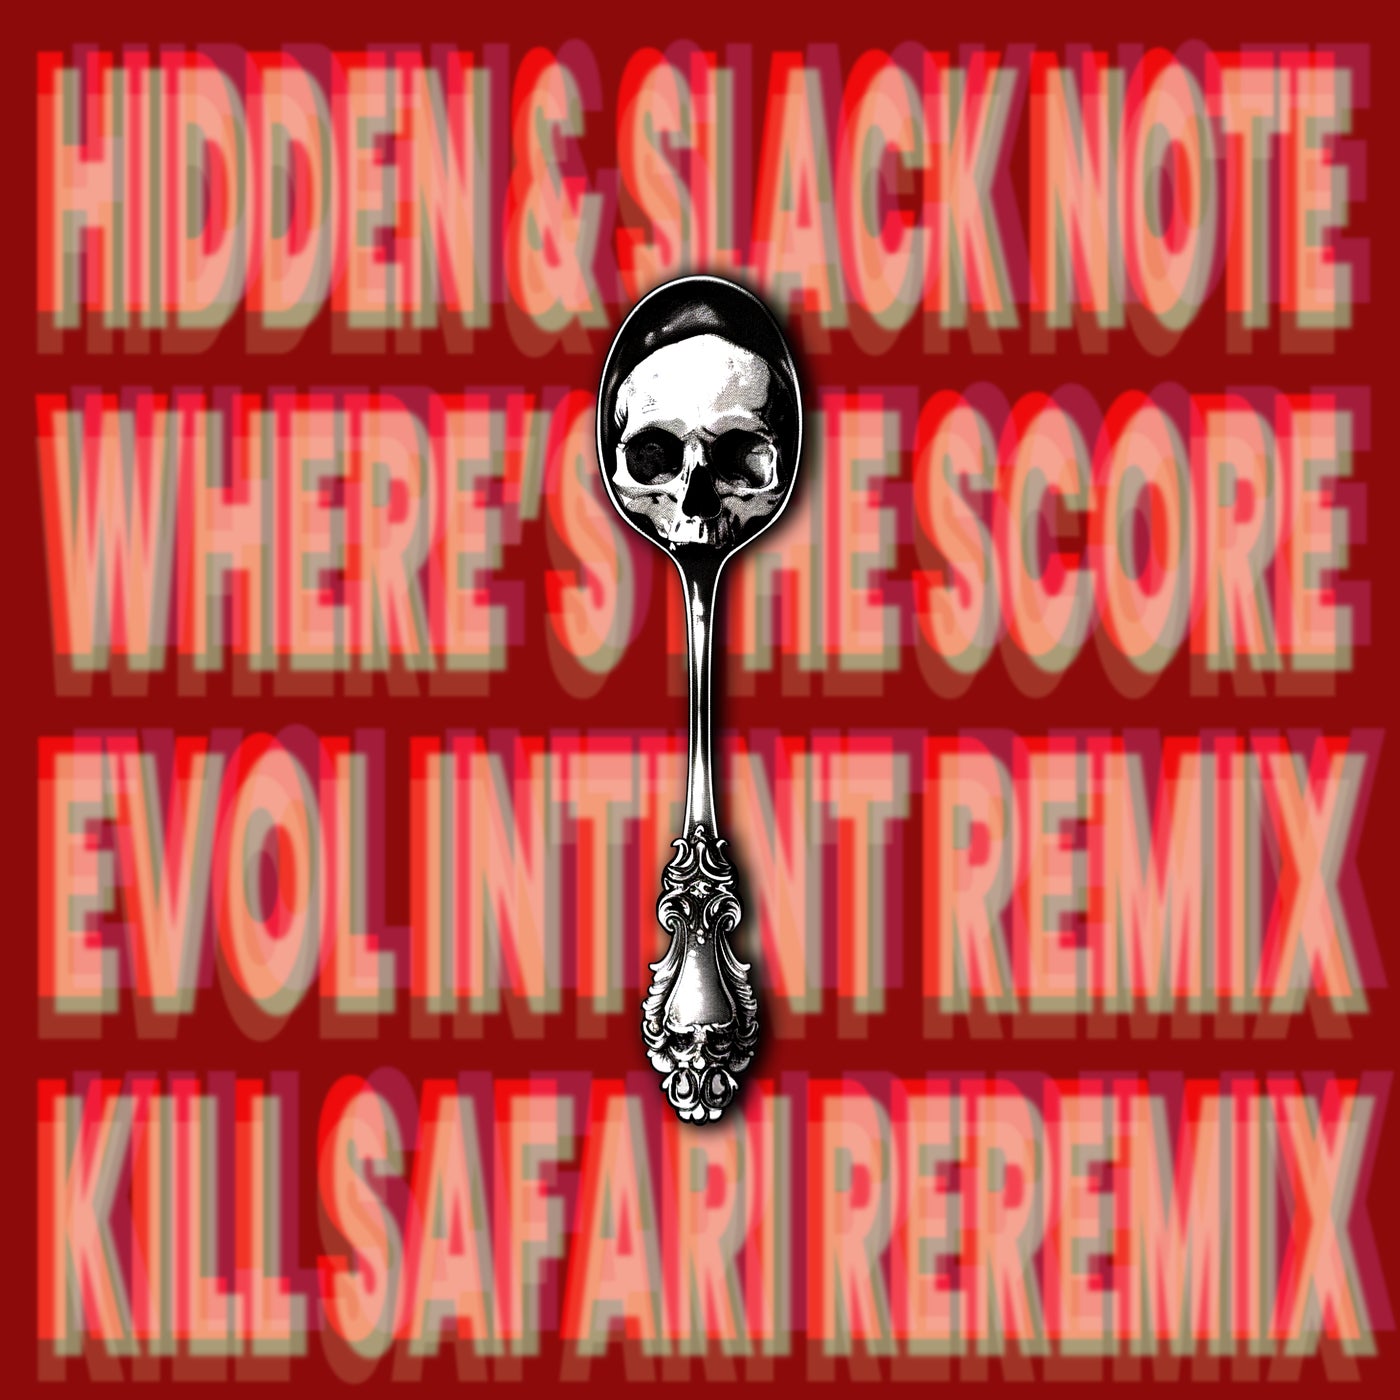 Where's The Score (Evol Intent Remix, KILL SAFARI REREMIX)